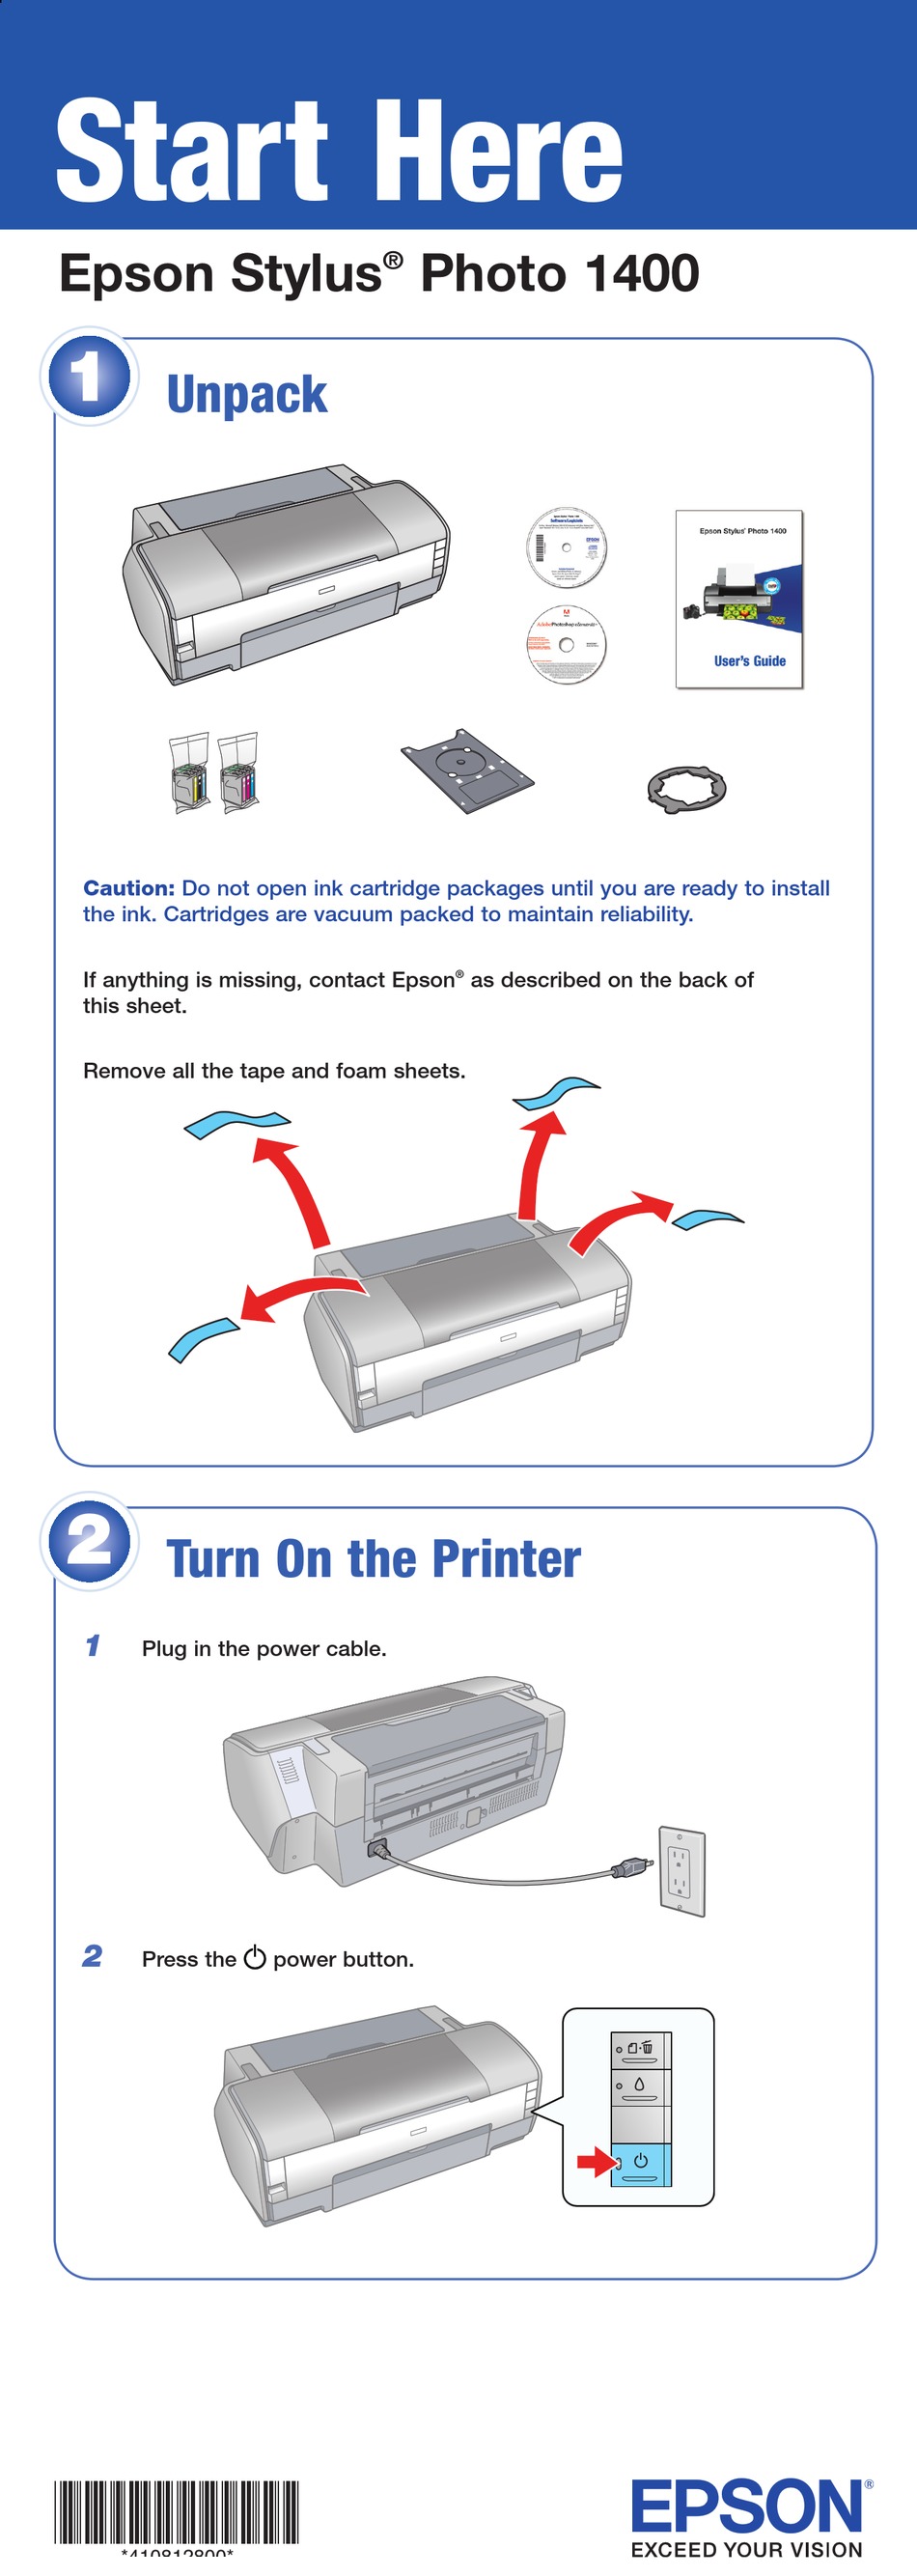 Epson Stylus Photo 1400 Printer Start Here Manual Manualslib 2214